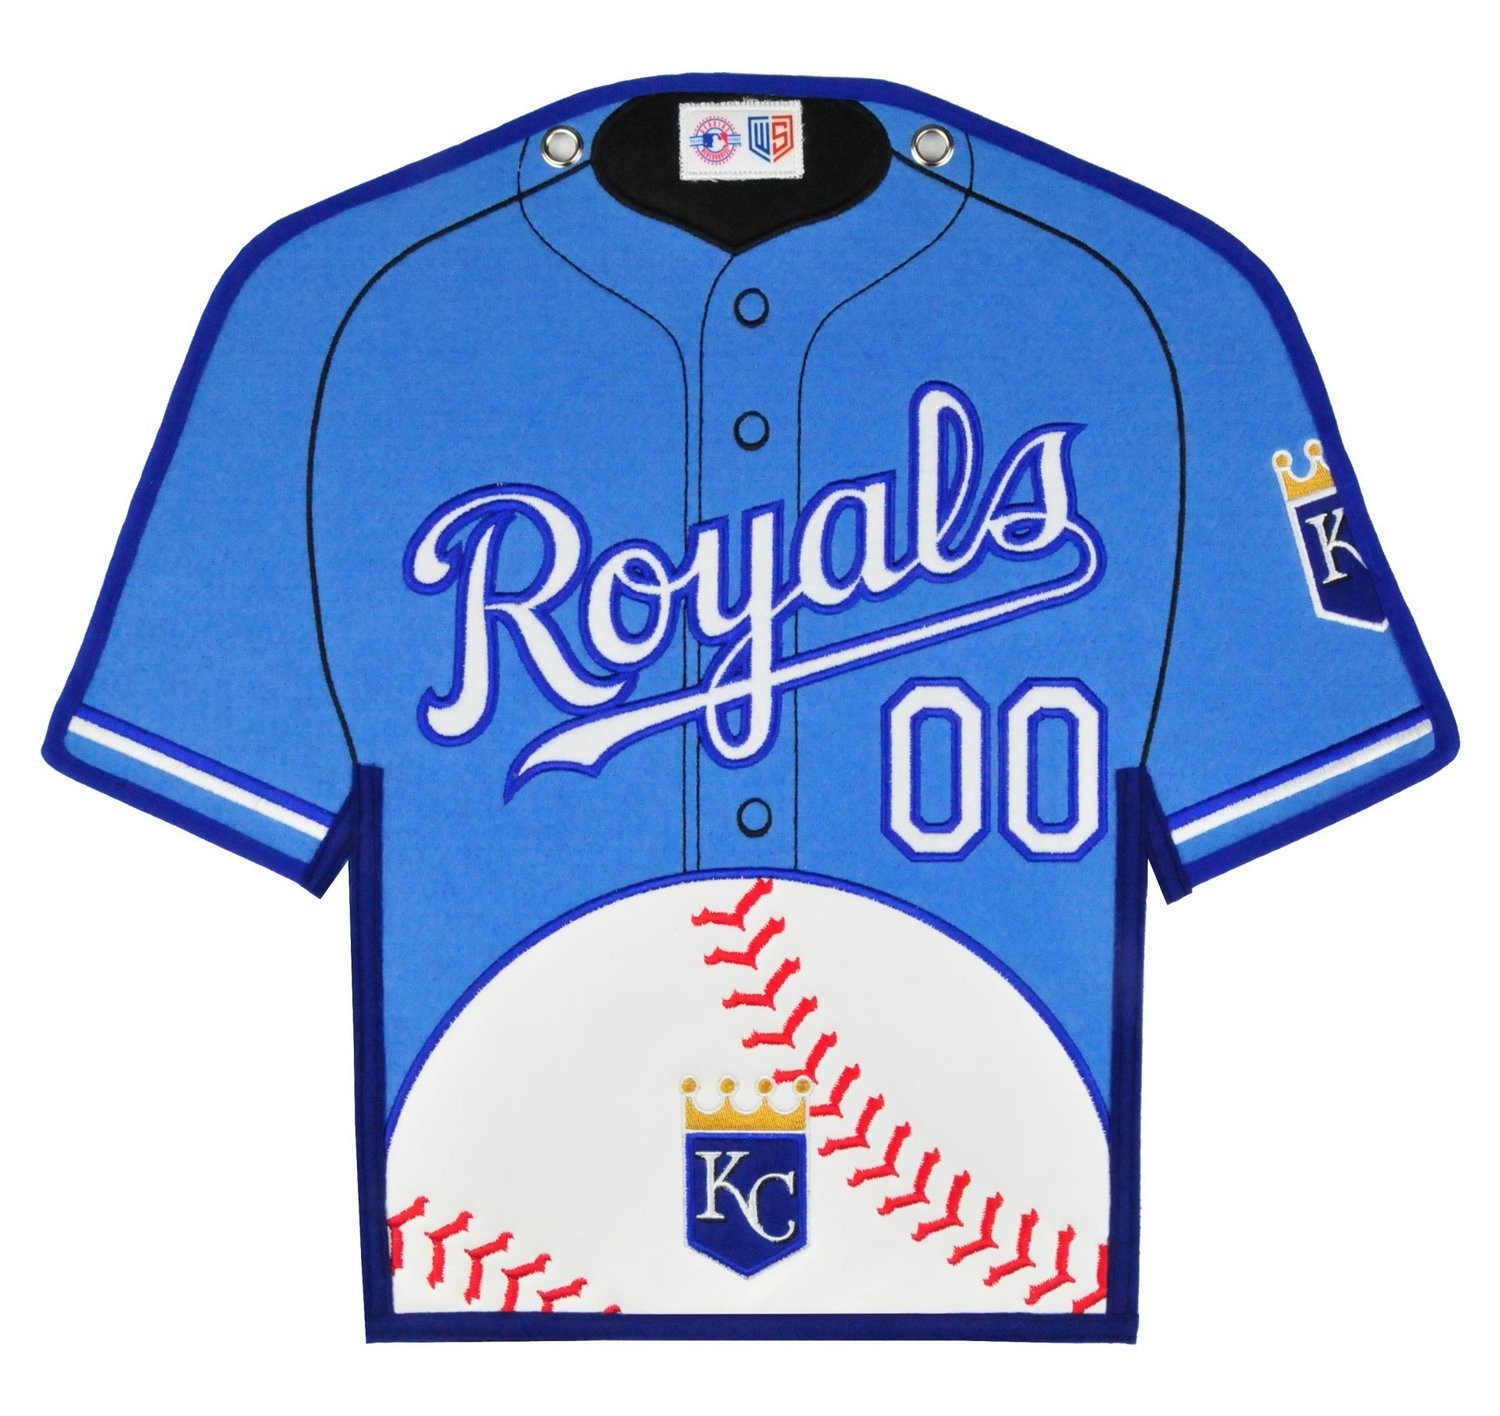 new kansas city royals jersey